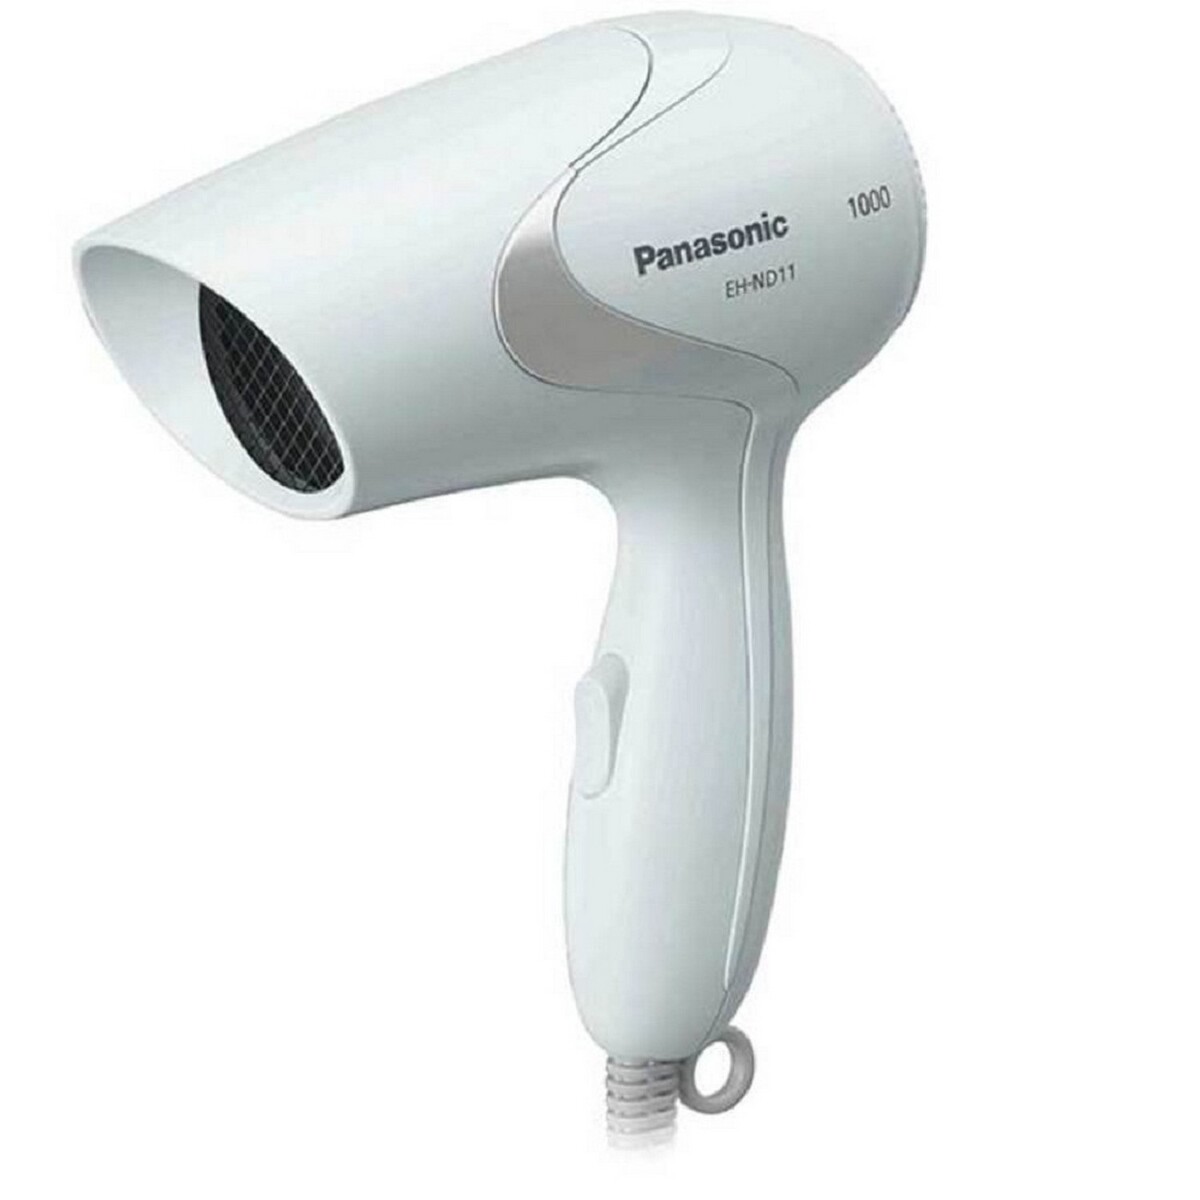 Panasonic Hair Dryer EH-ND11-W62B